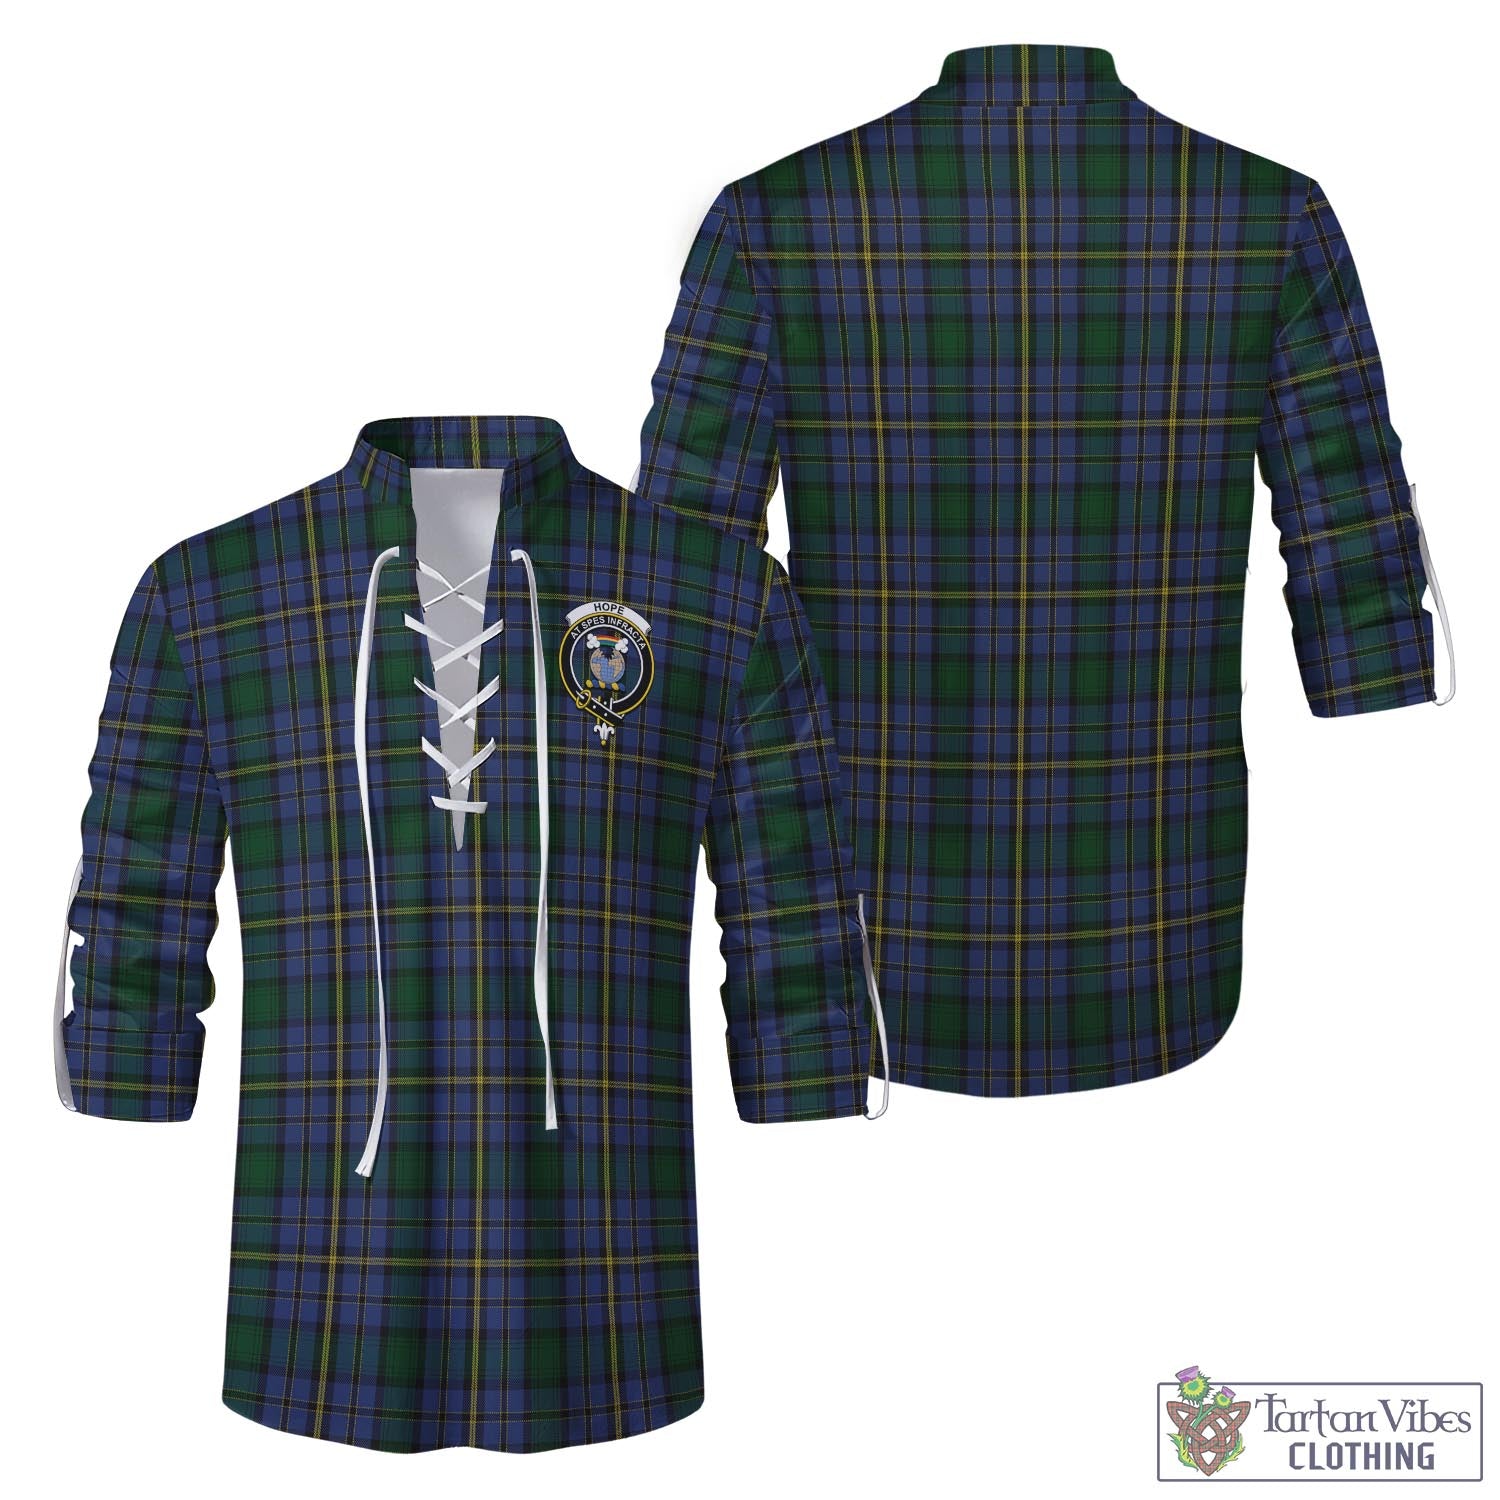 Tartan Vibes Clothing Hope Clan Originaux Tartan Men's Scottish Traditional Jacobite Ghillie Kilt Shirt with Family Crest